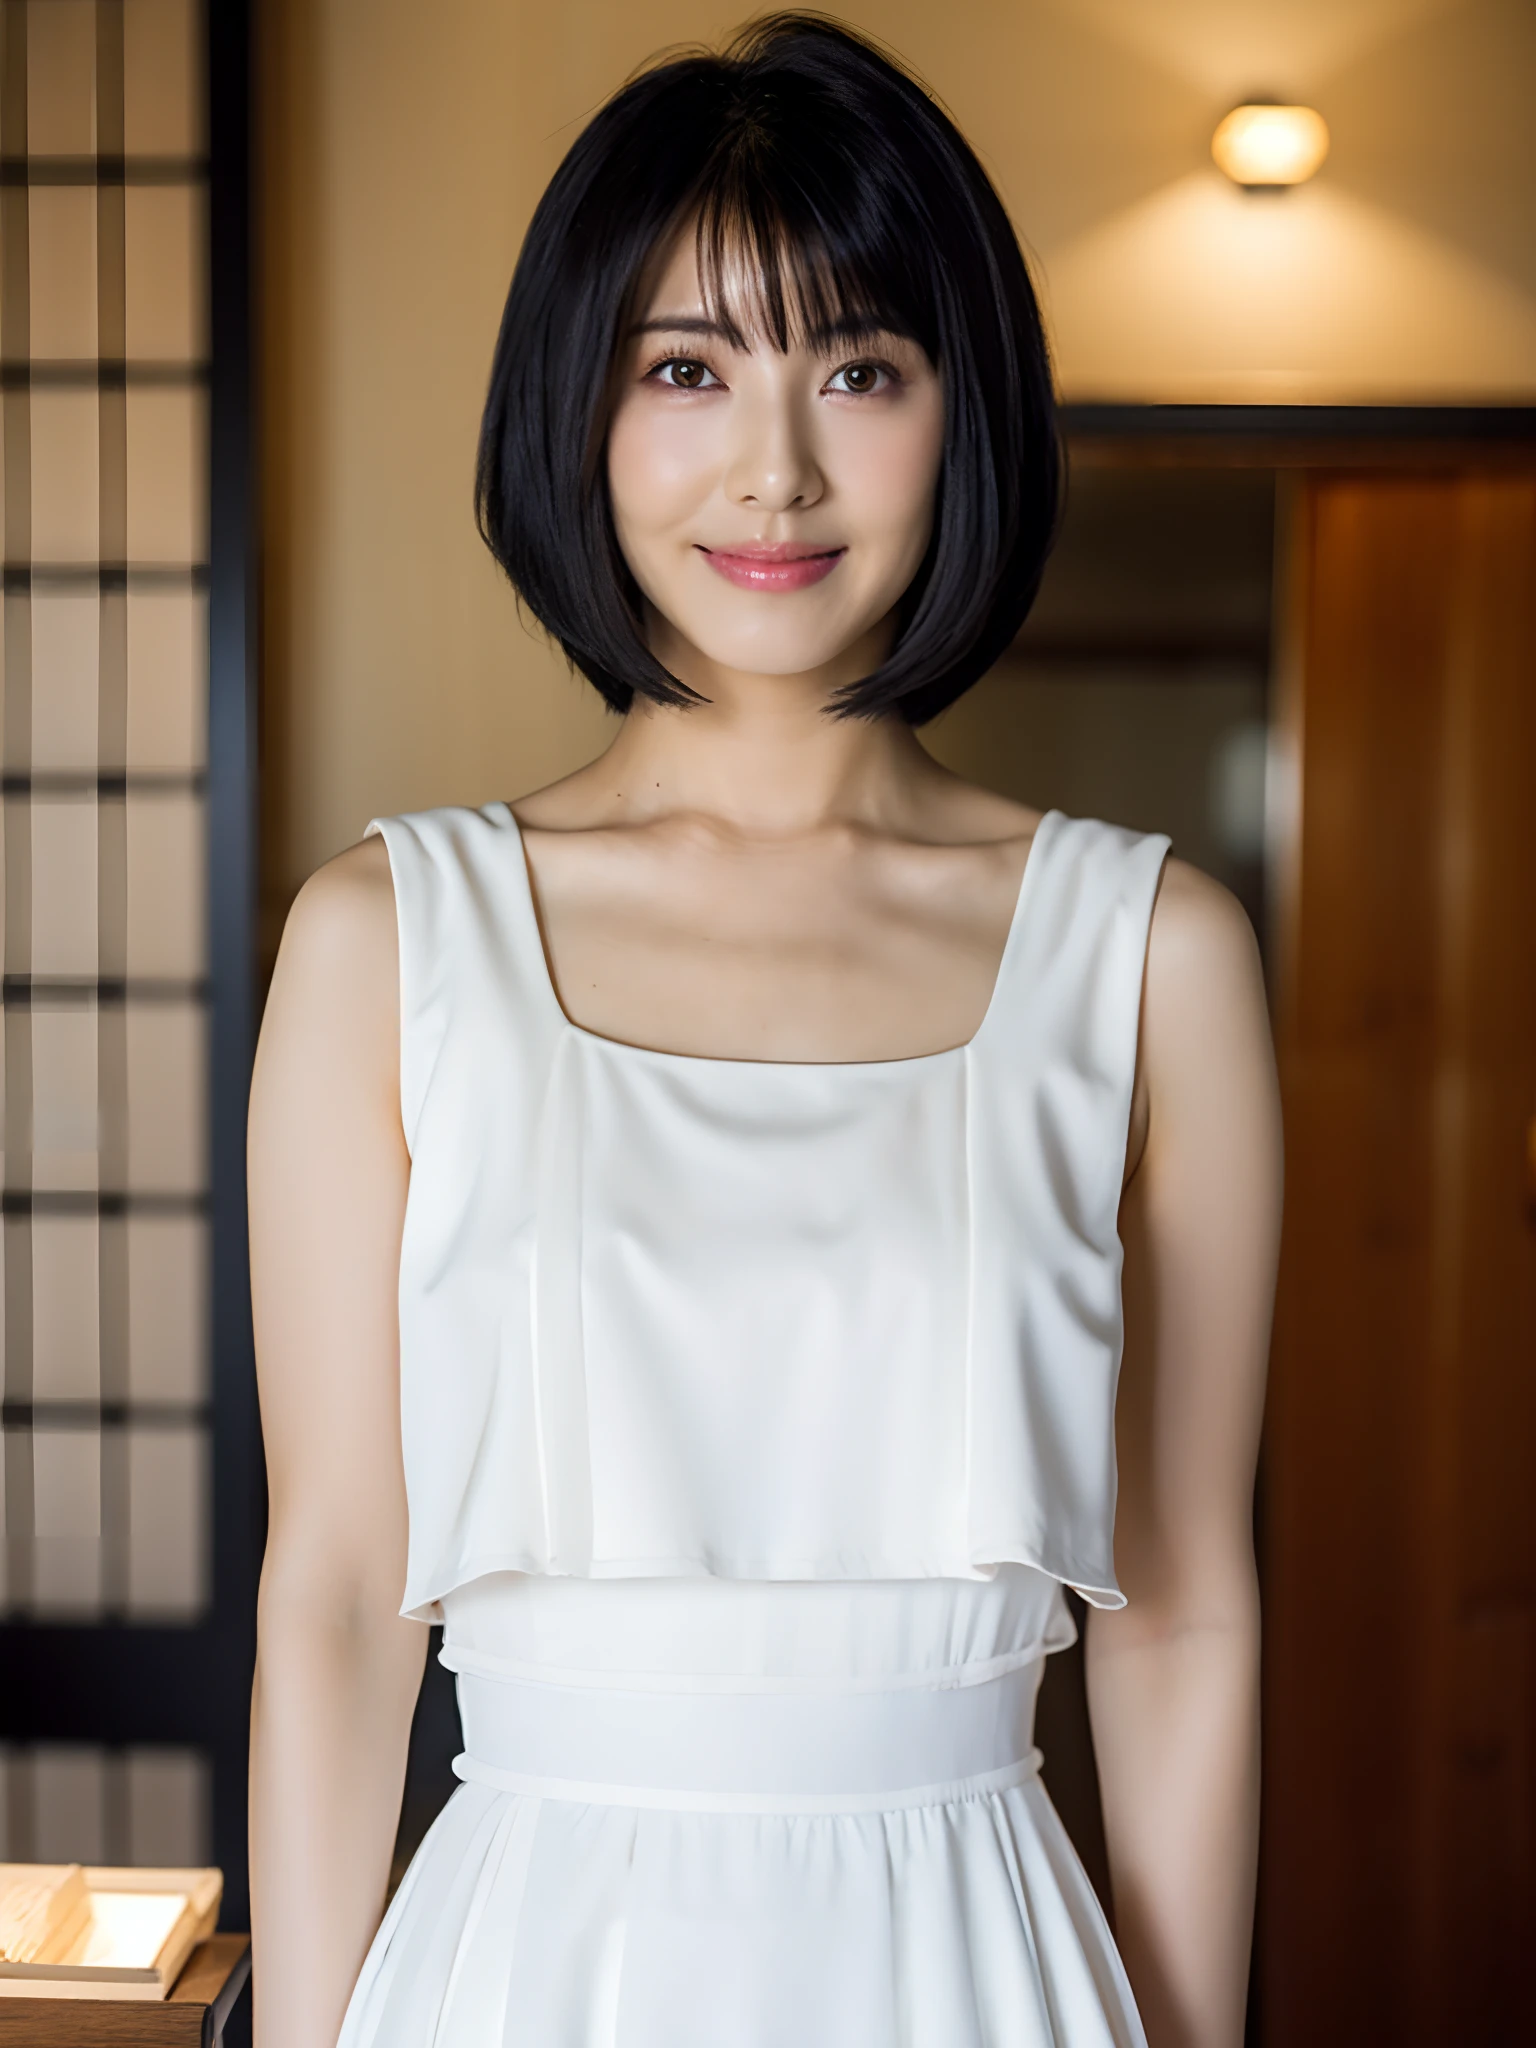 HamabeMinami 美女短发黑发丰满白色连衣裙在日本咖啡馆